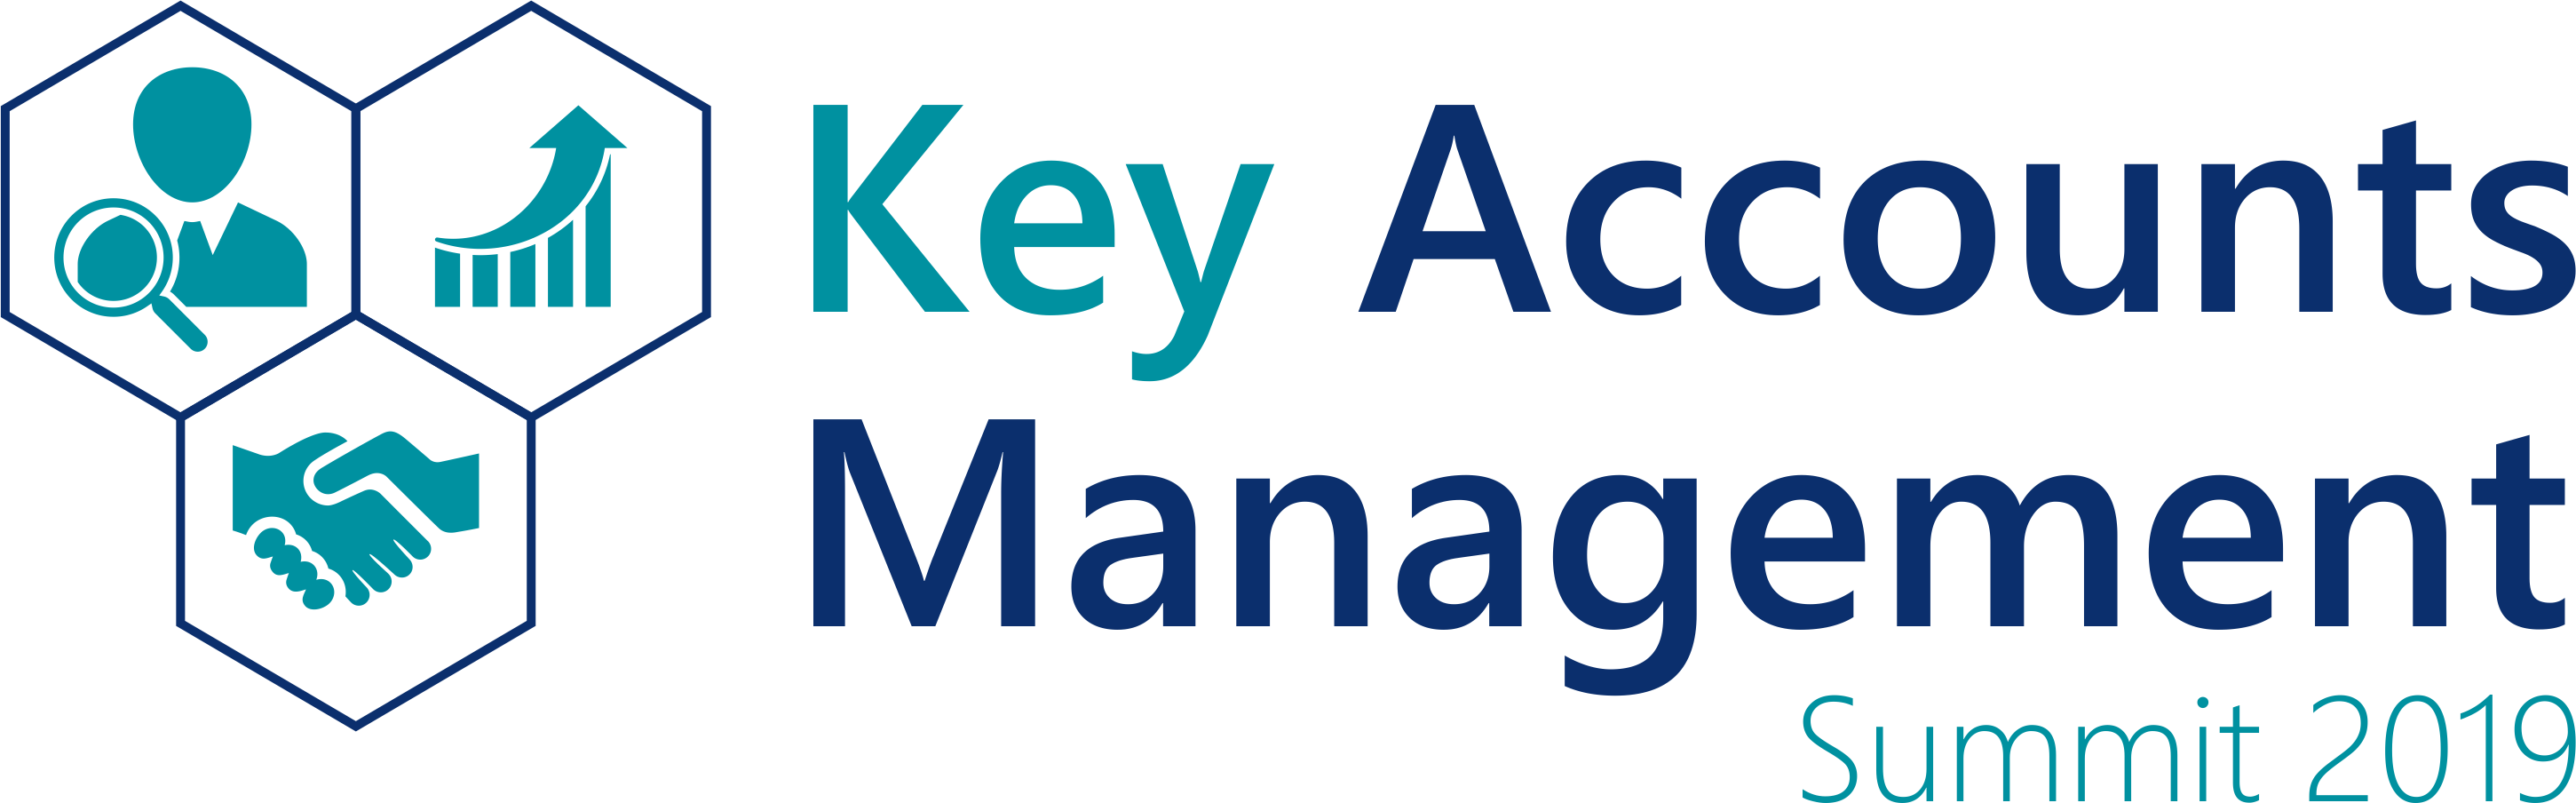 1st Edition Key Accounts Manangement Summit 2019